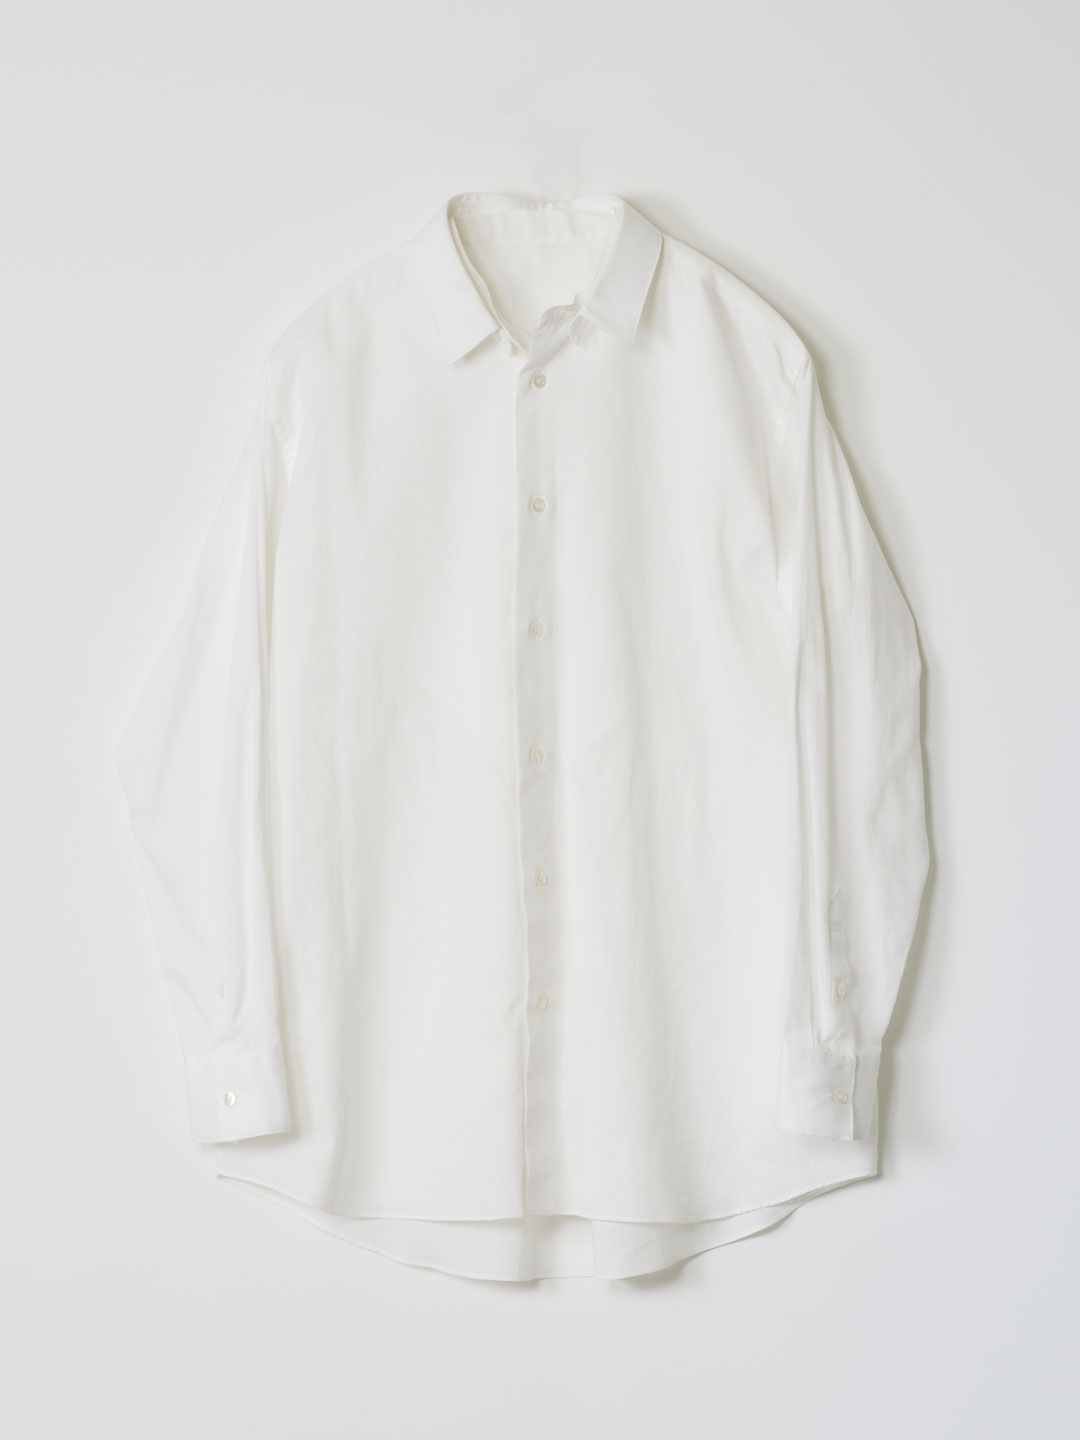 No.0227 Cotton Pique Dress Shirt - White